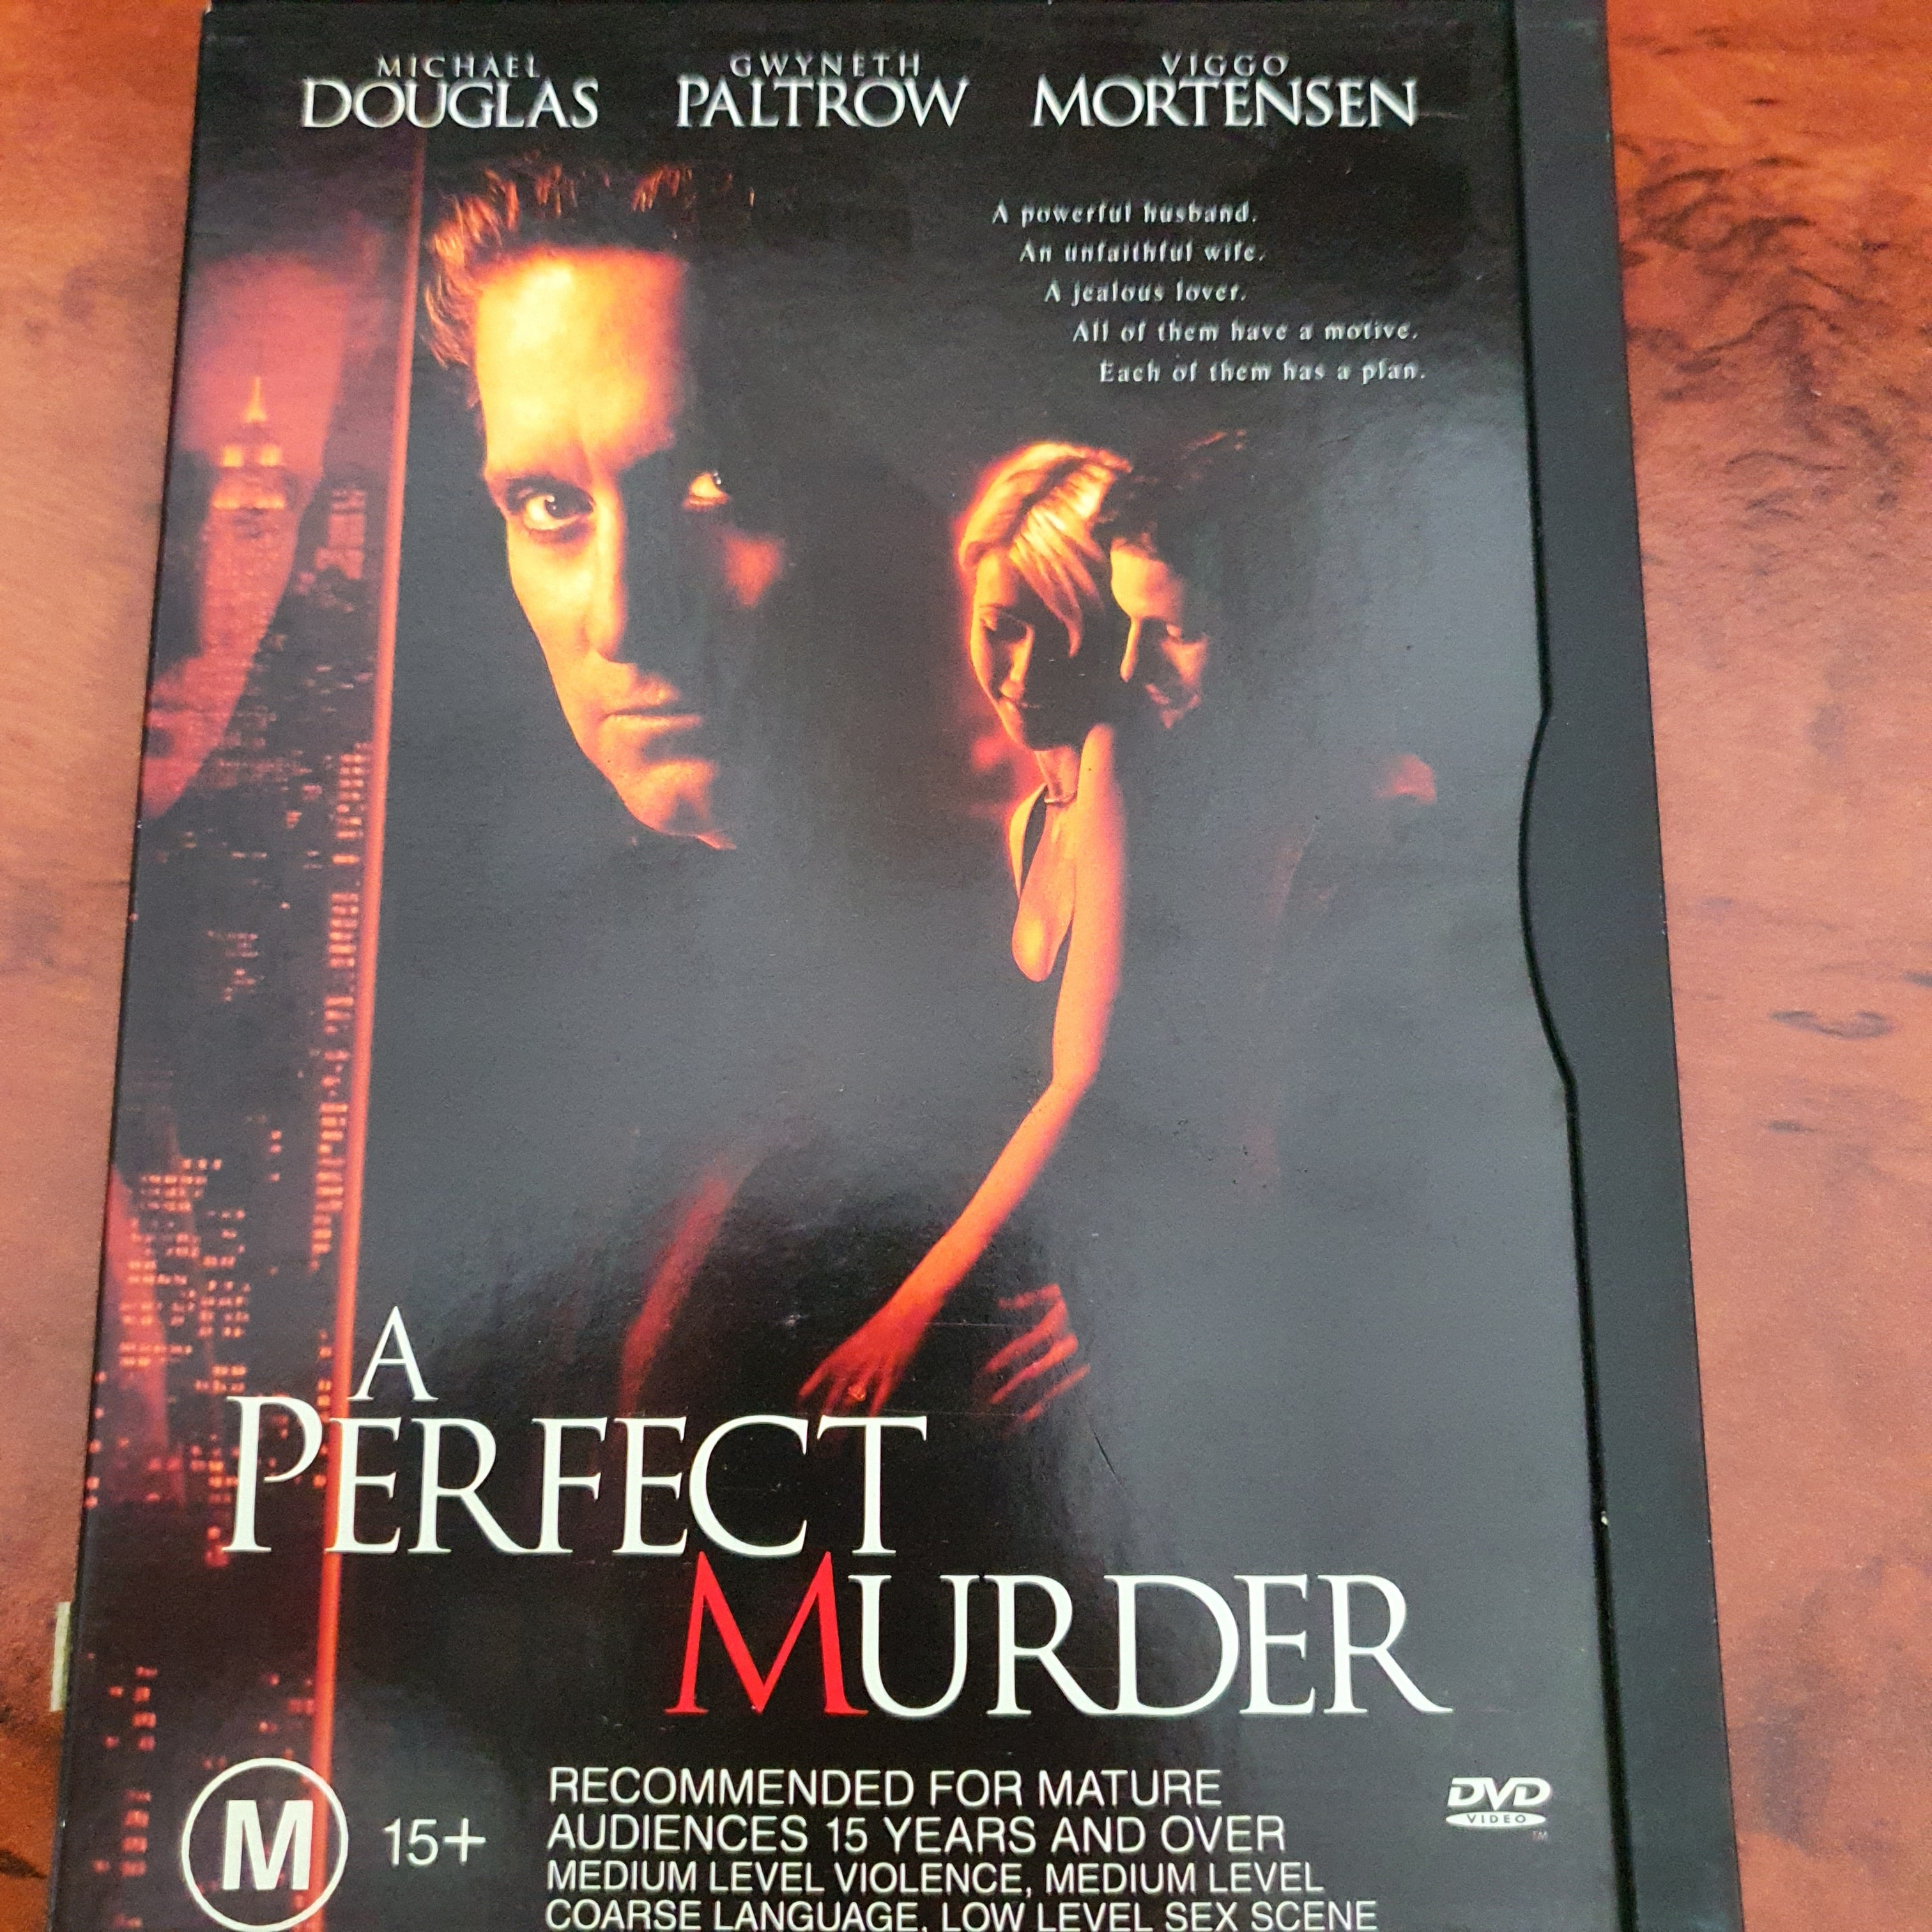 A PERFECT MURDER